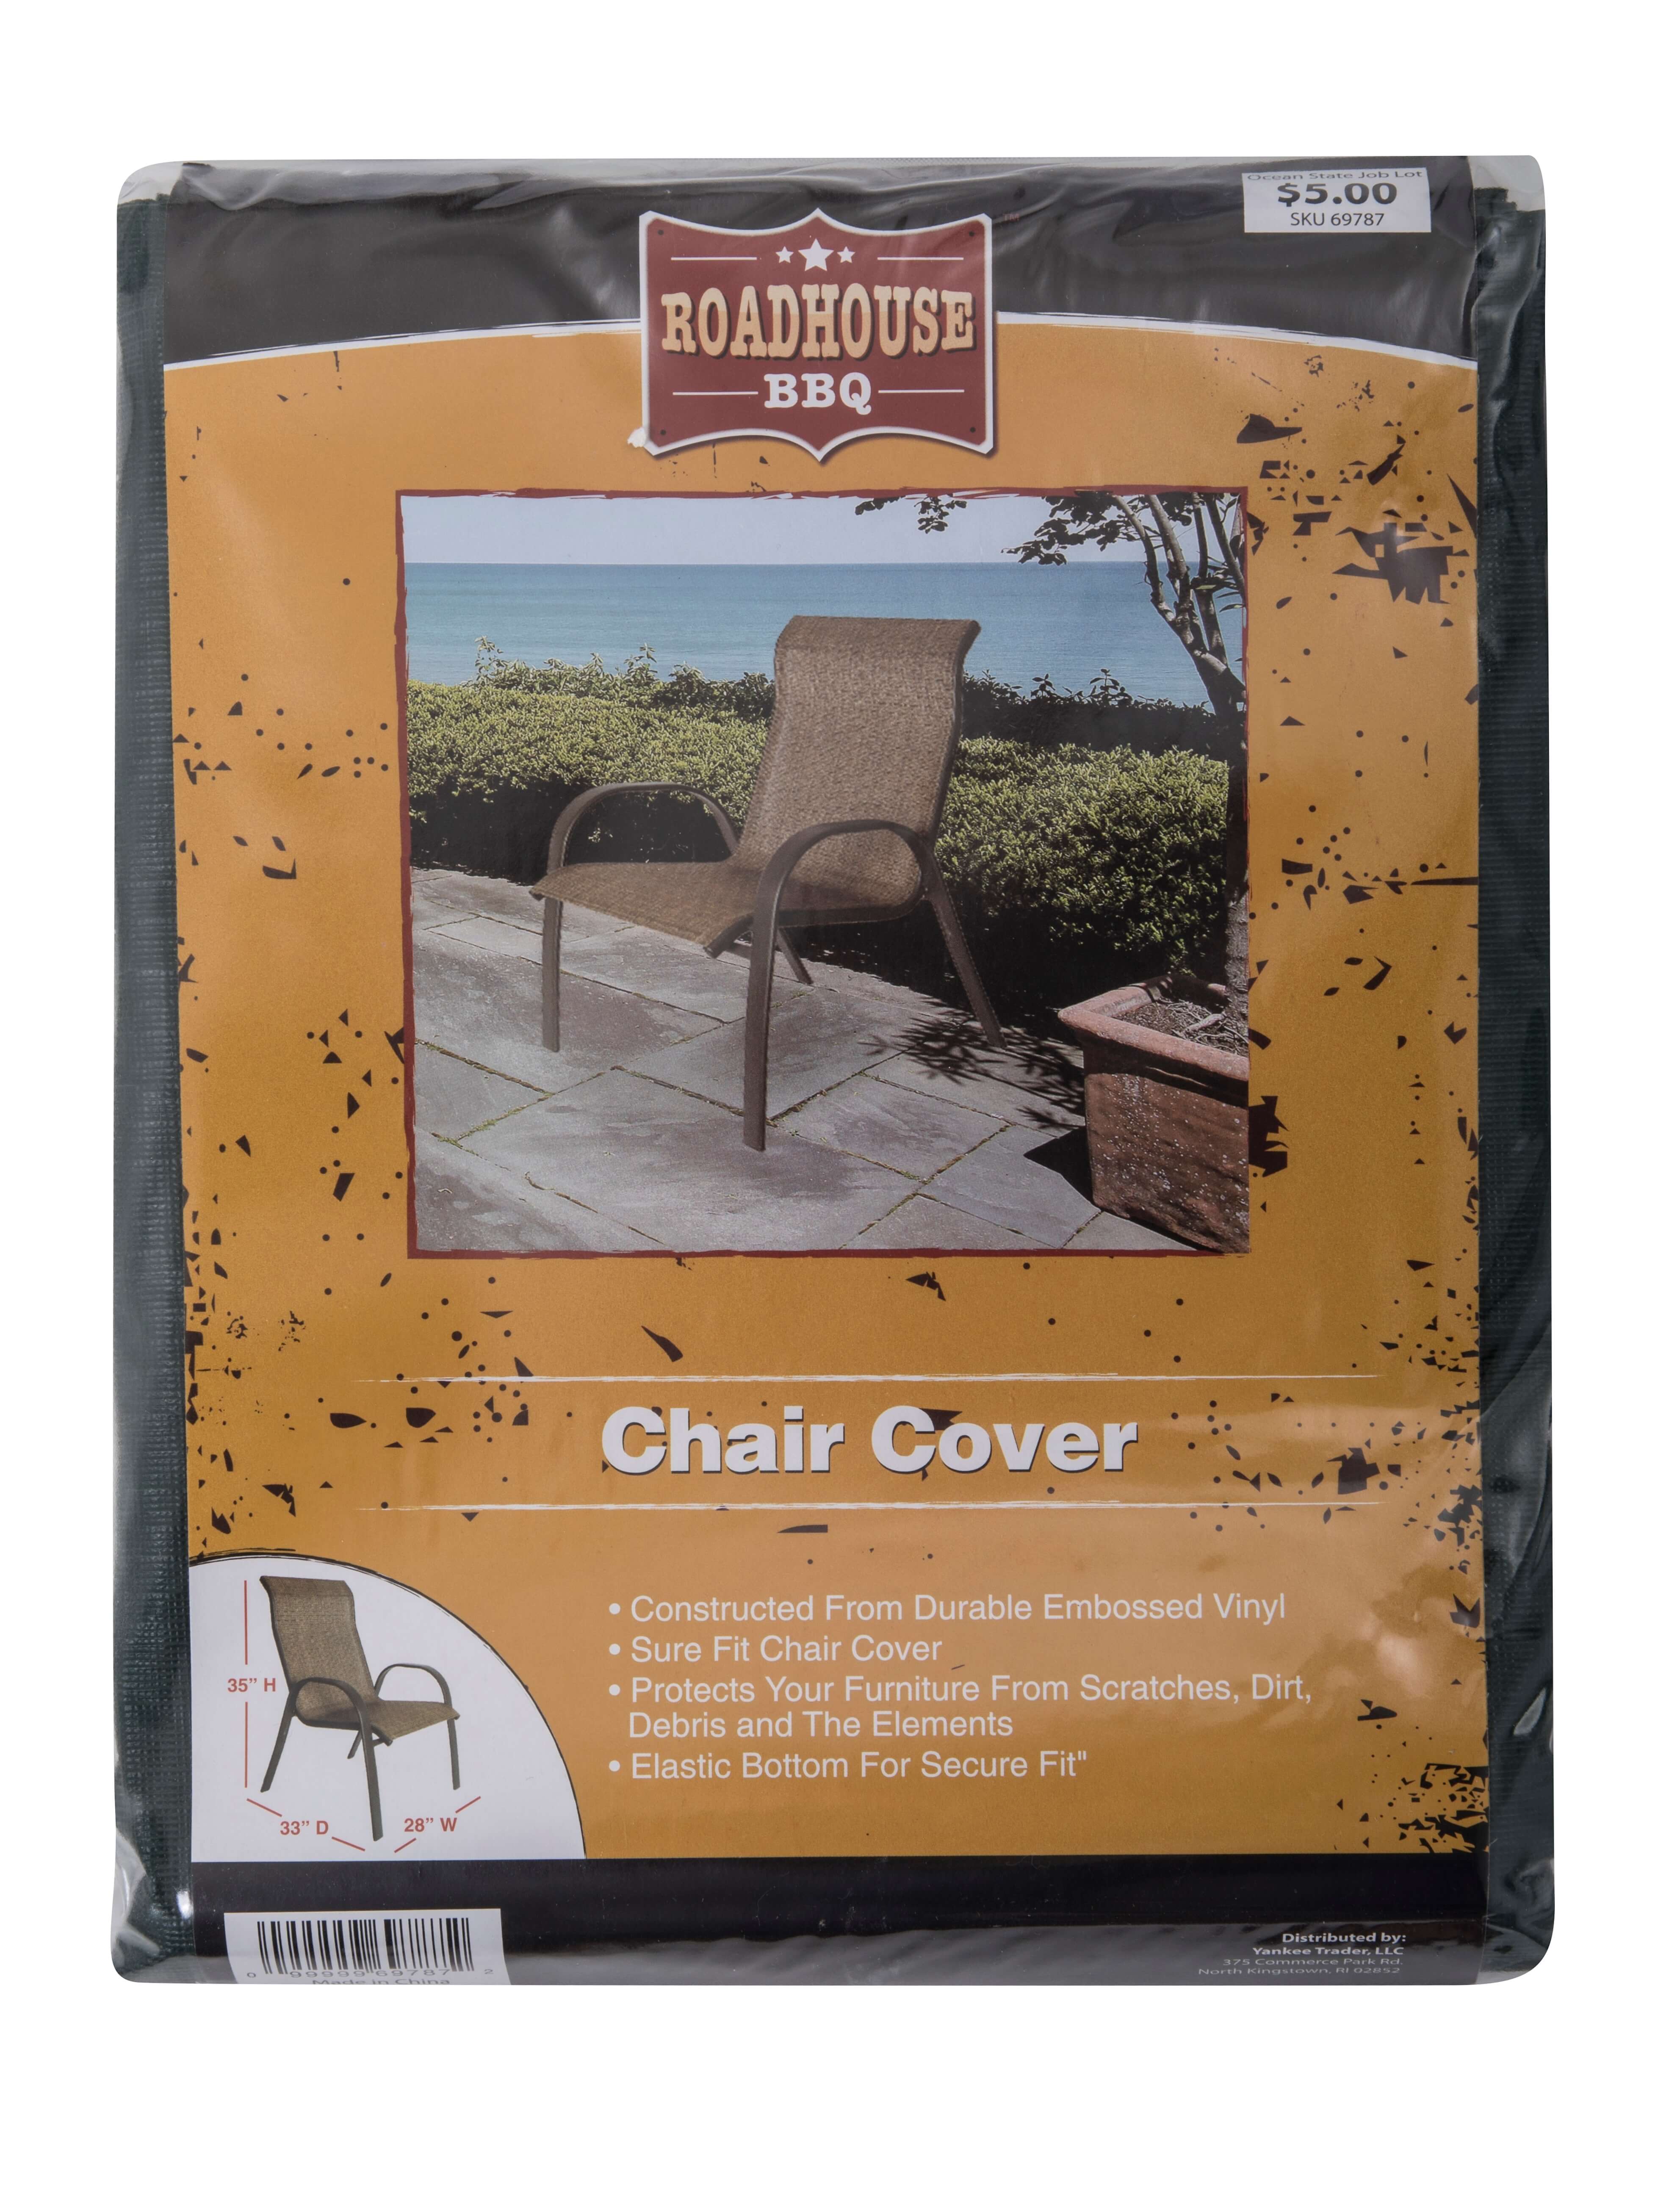 Roadhouse BBQ Chair Cover, 35"